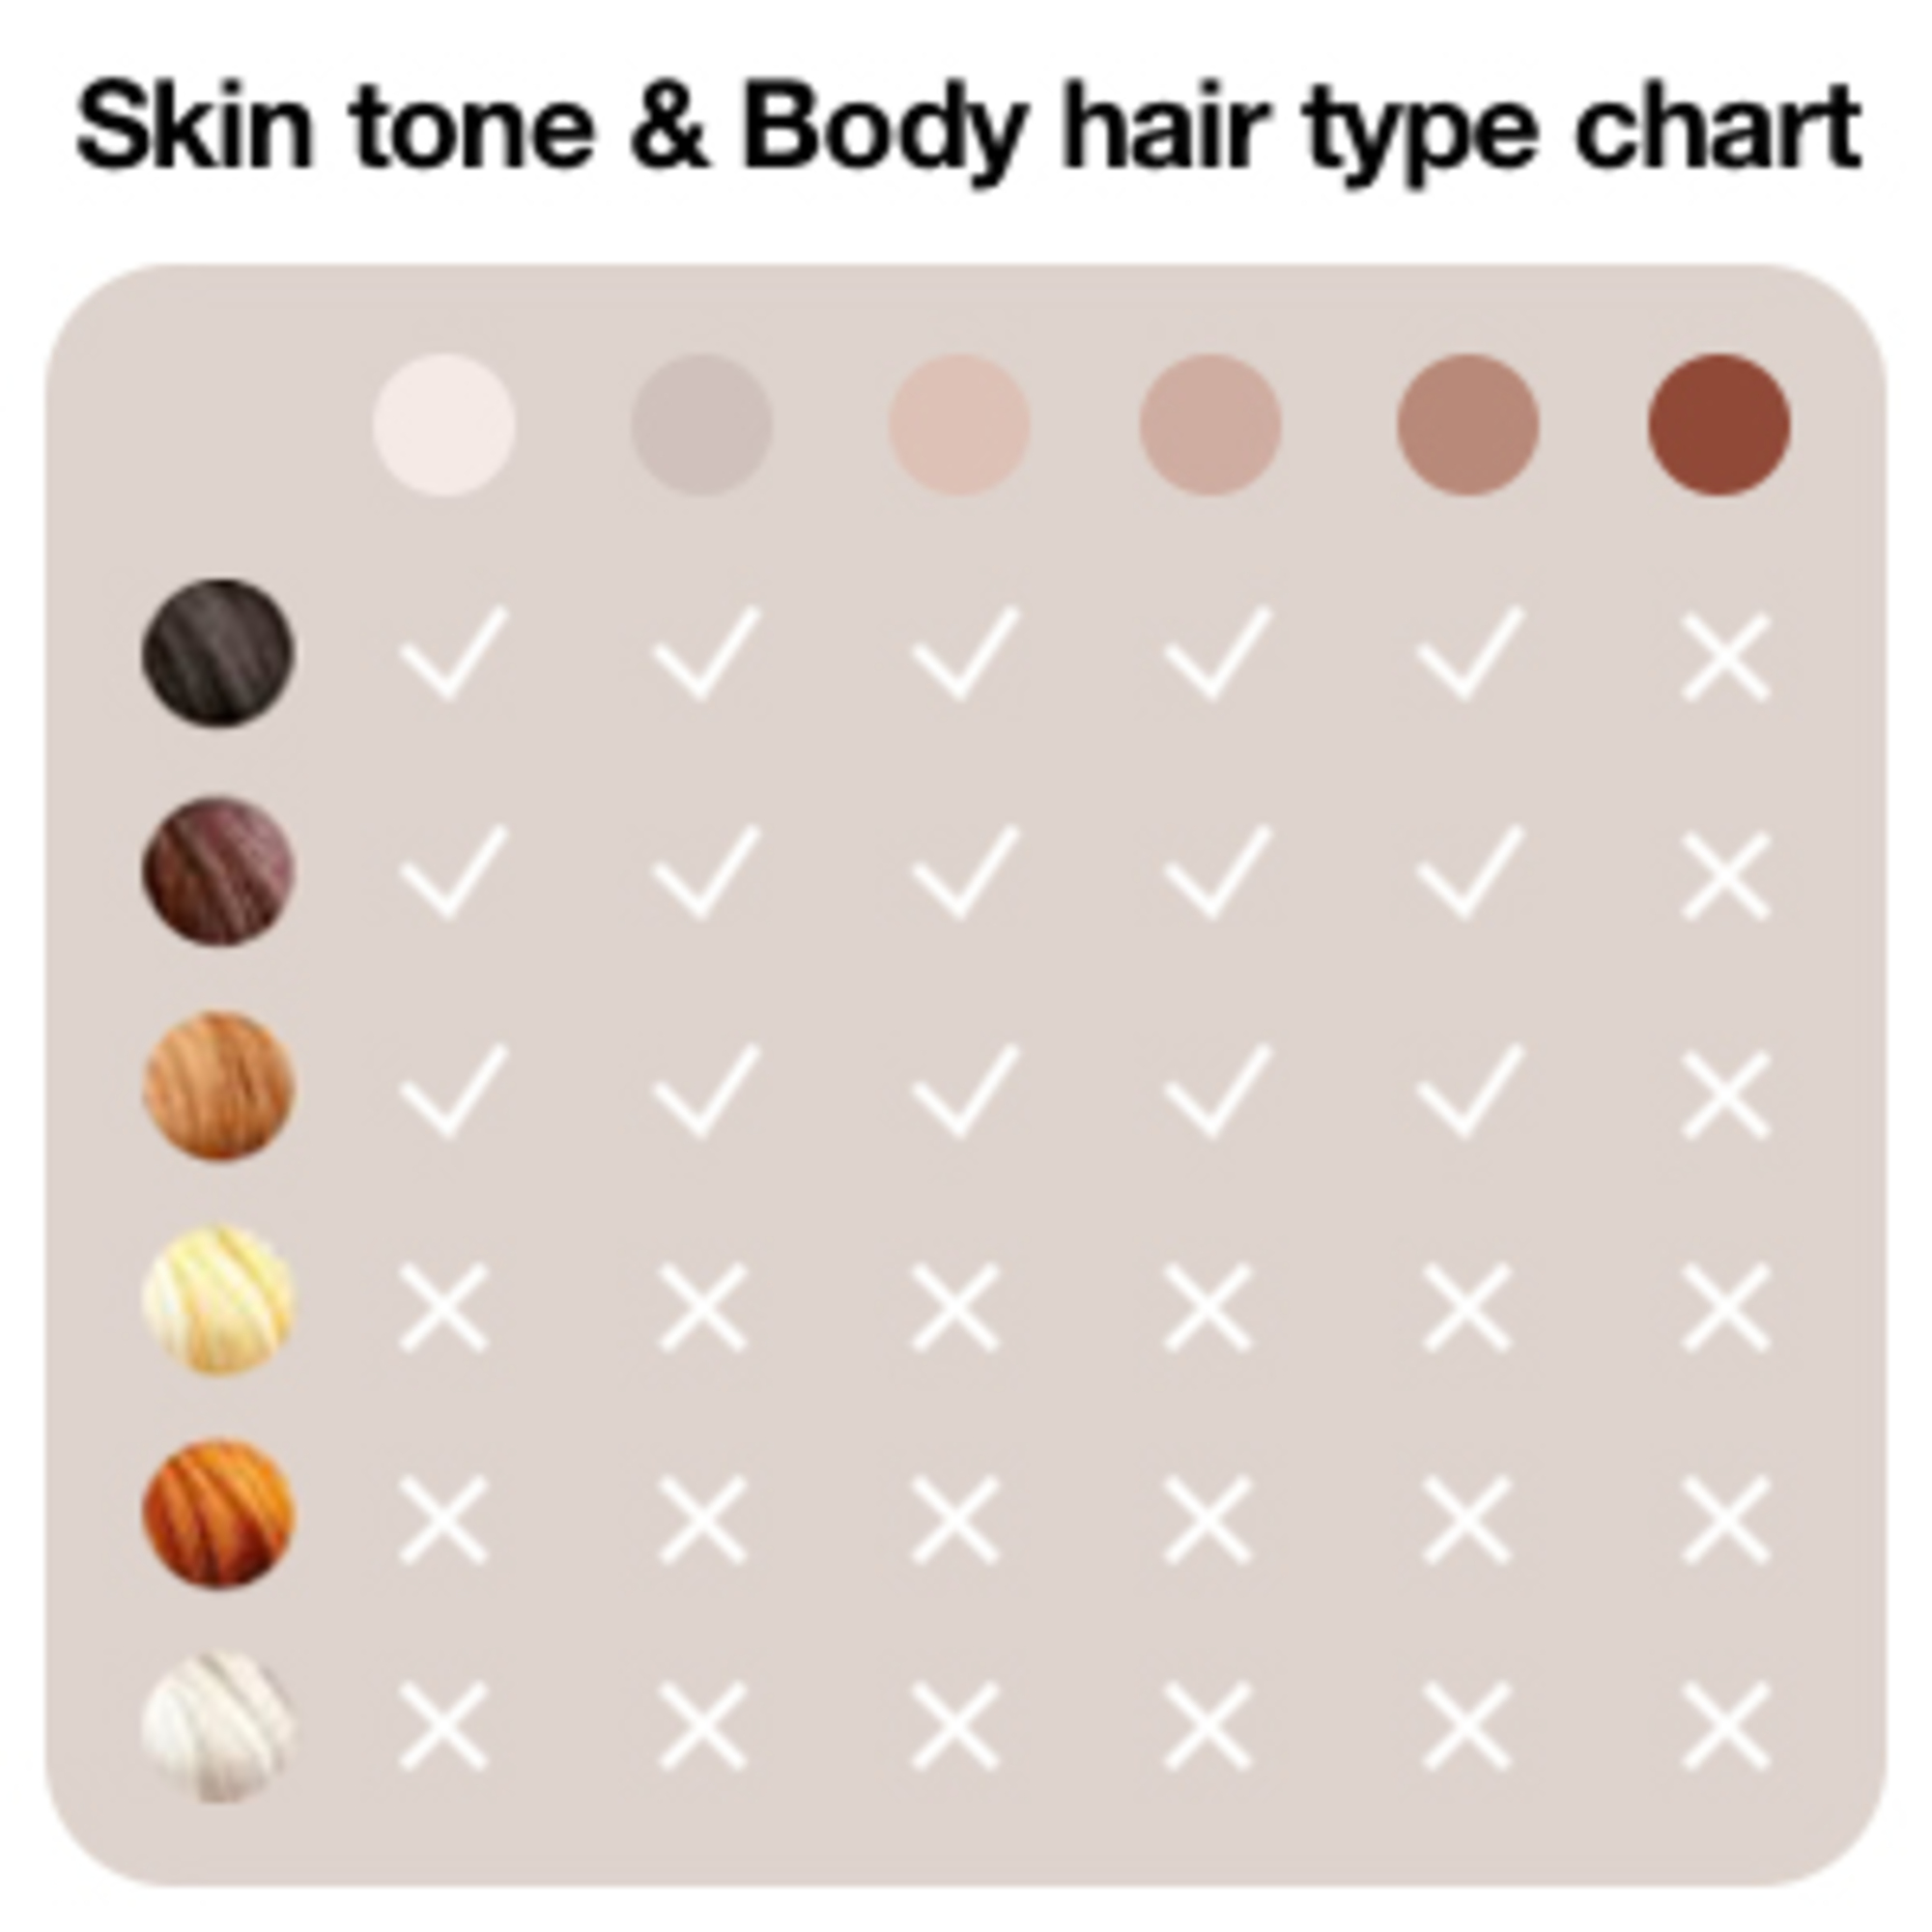 Skin tone & Body hair type chart